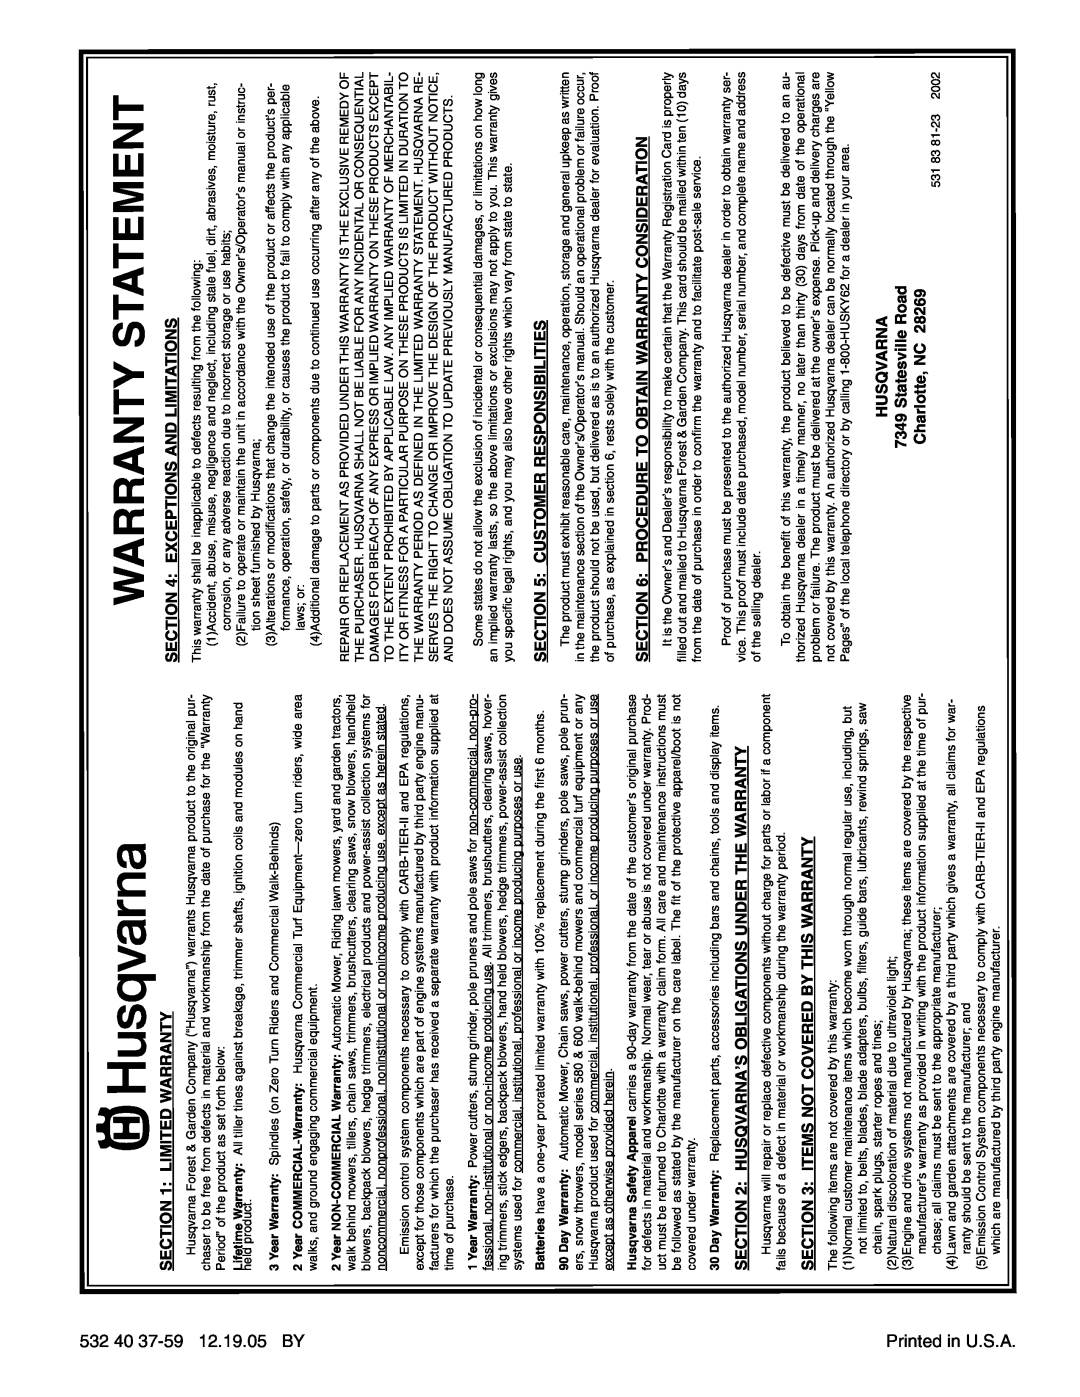 Husqvarna 5524SEB owner manual Statementwarranty, 532 40 37-59 12.19.05 BY, 2002, Anr Avsq Uh 